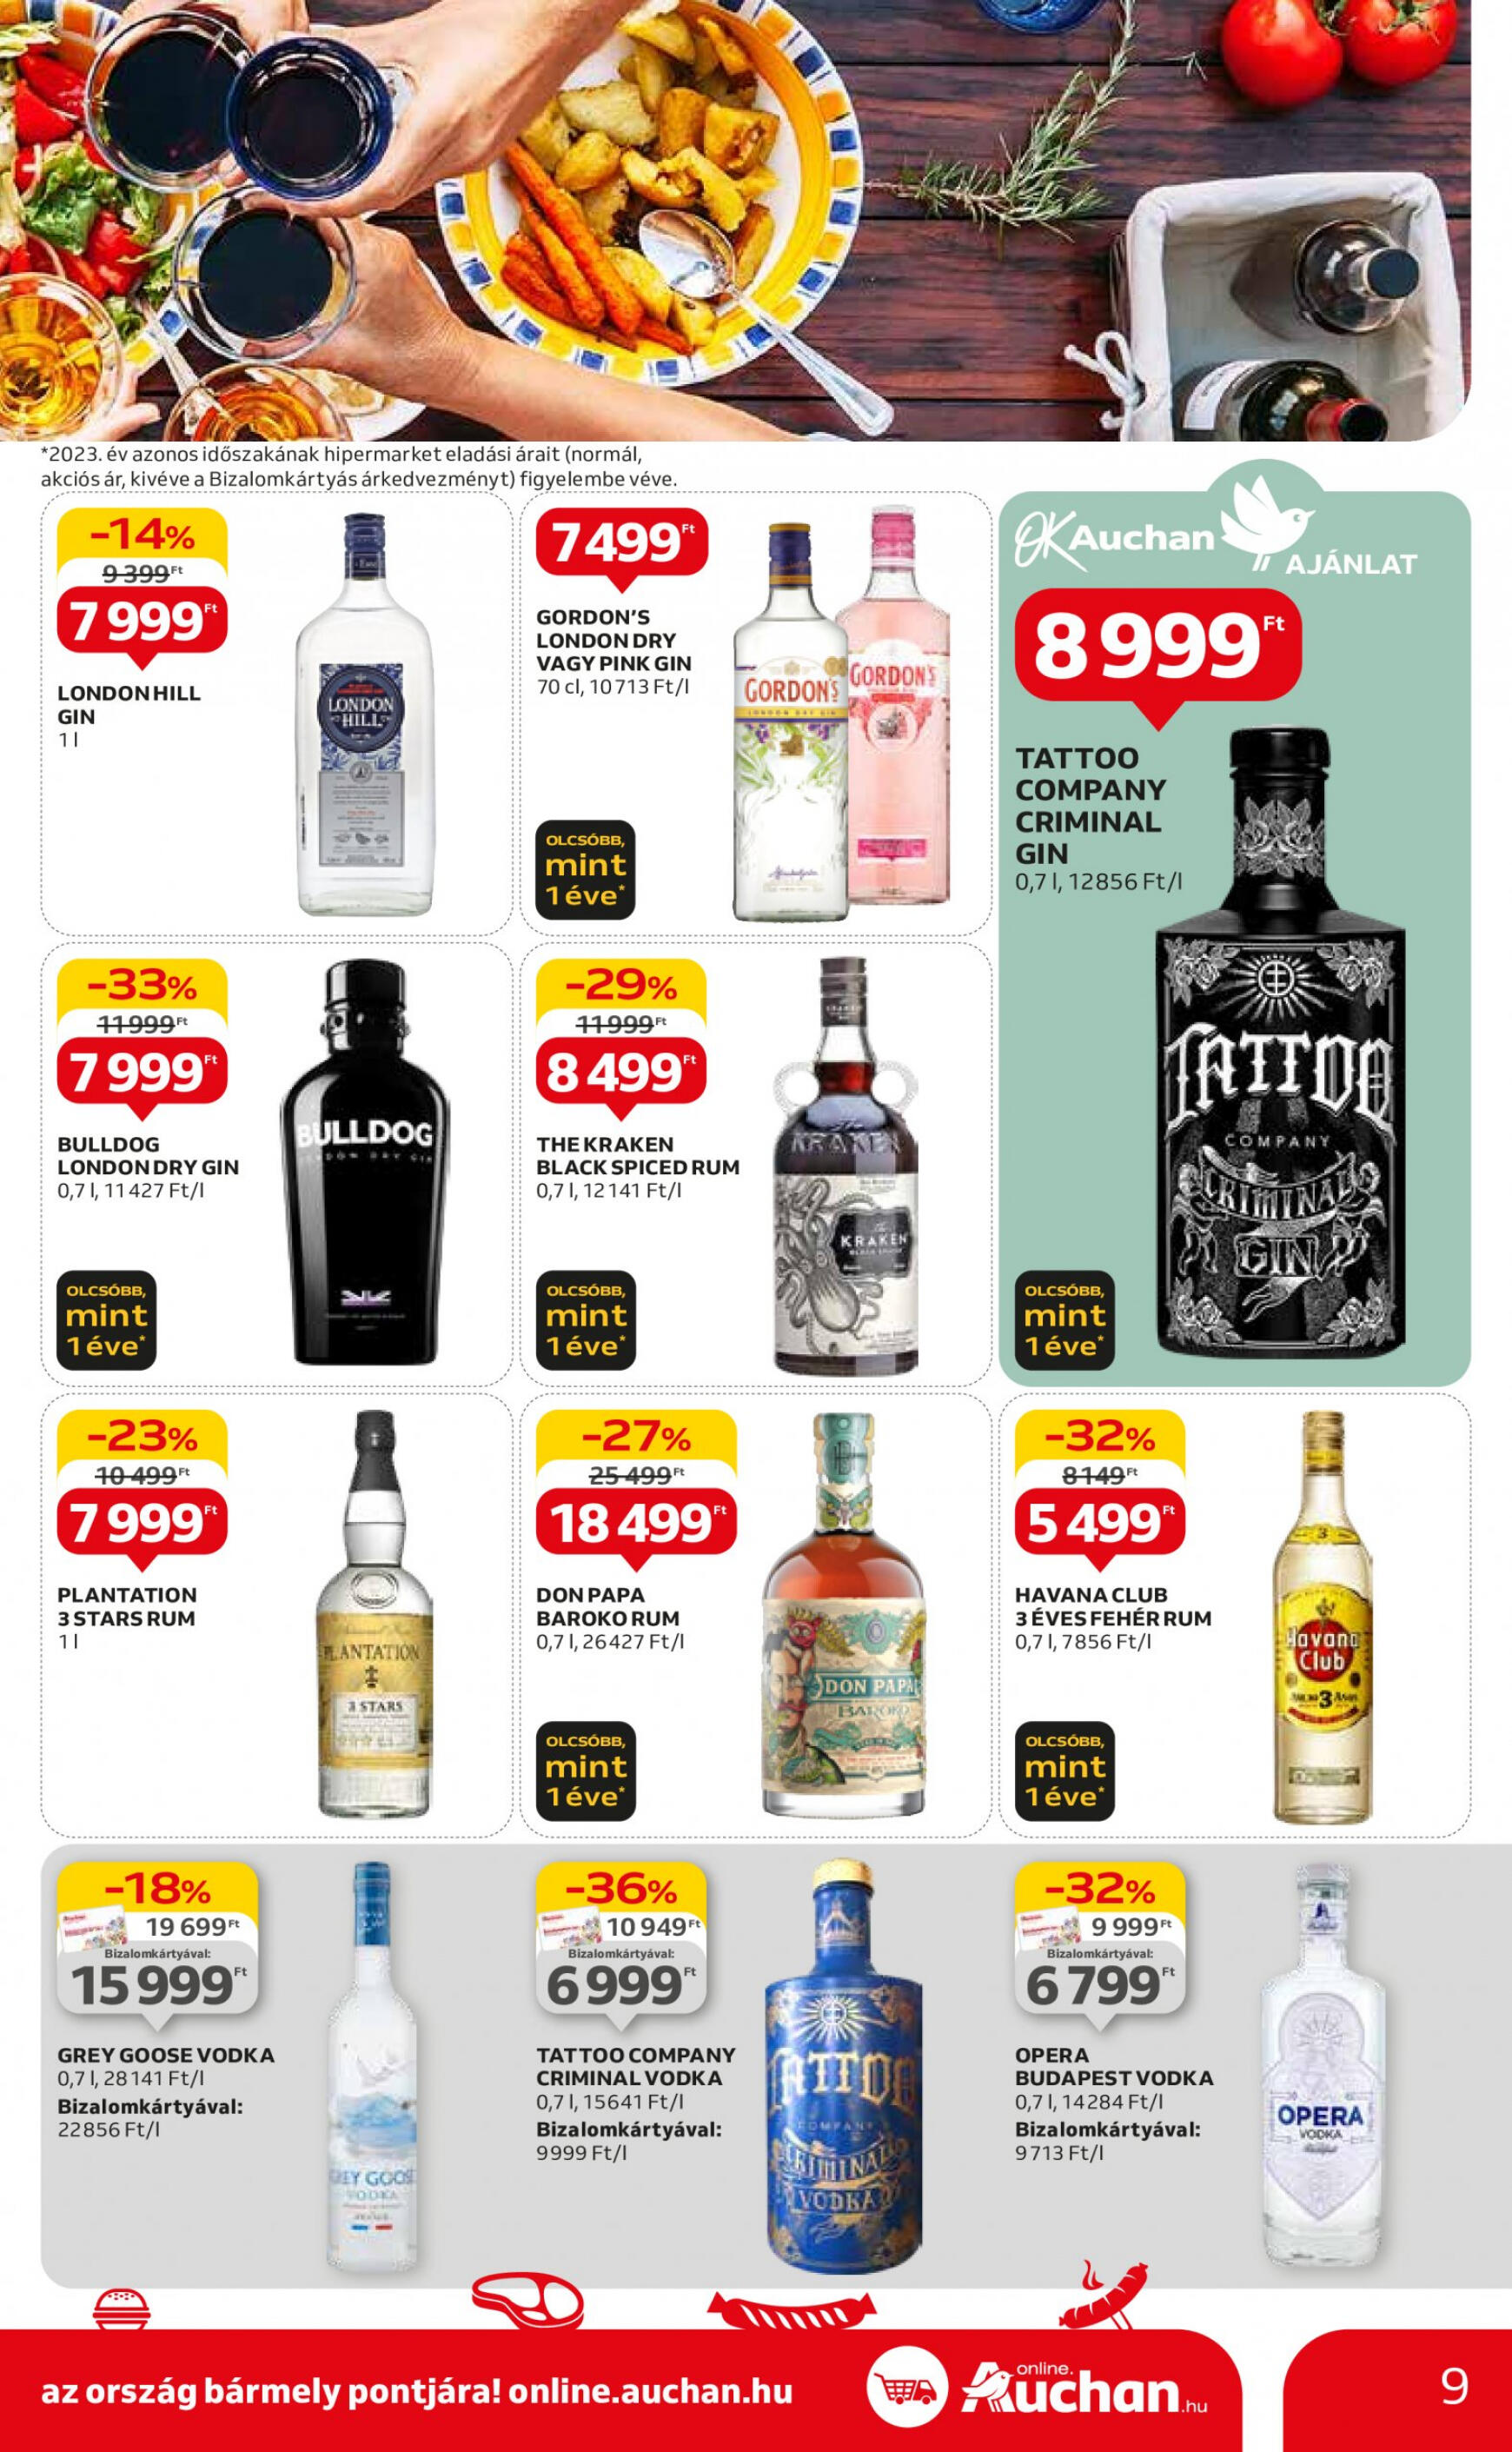 auchan - Aktuális újság Auchan 05.09. - 05.15. - page: 9